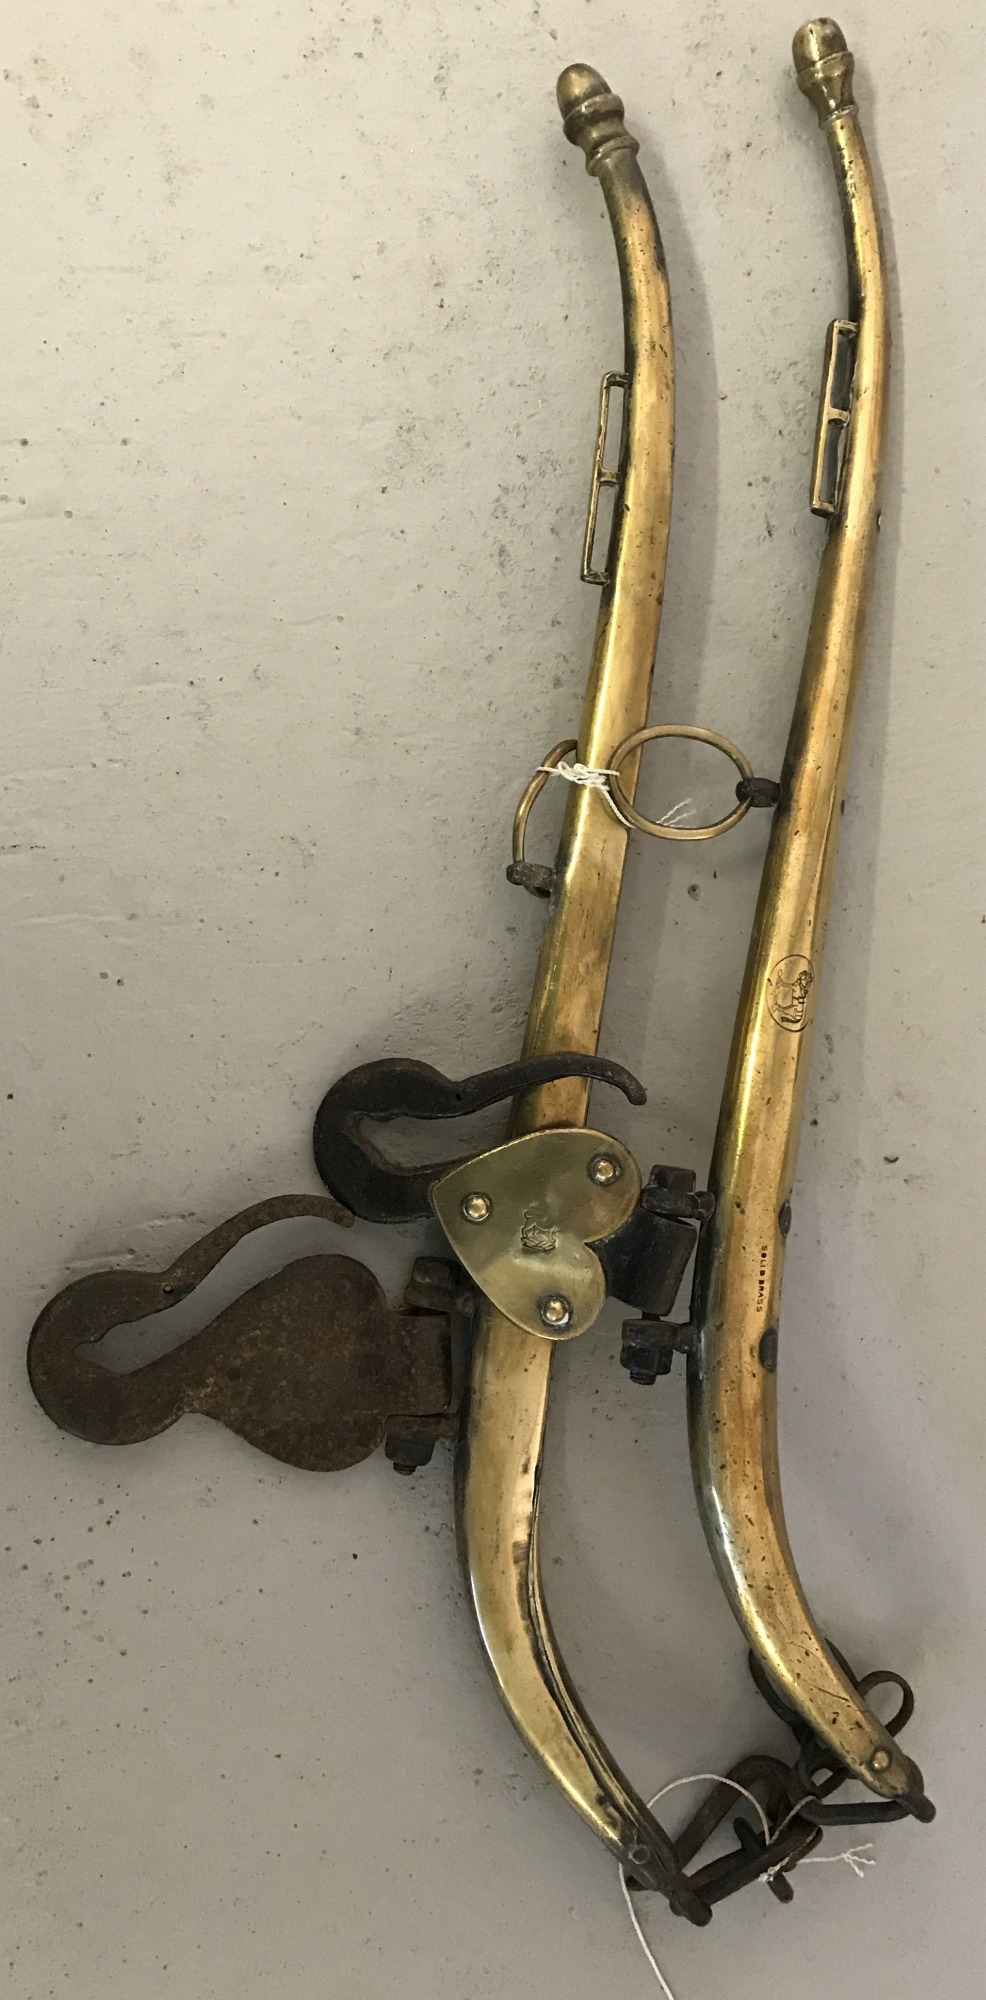 A pair of vintage brass hames.